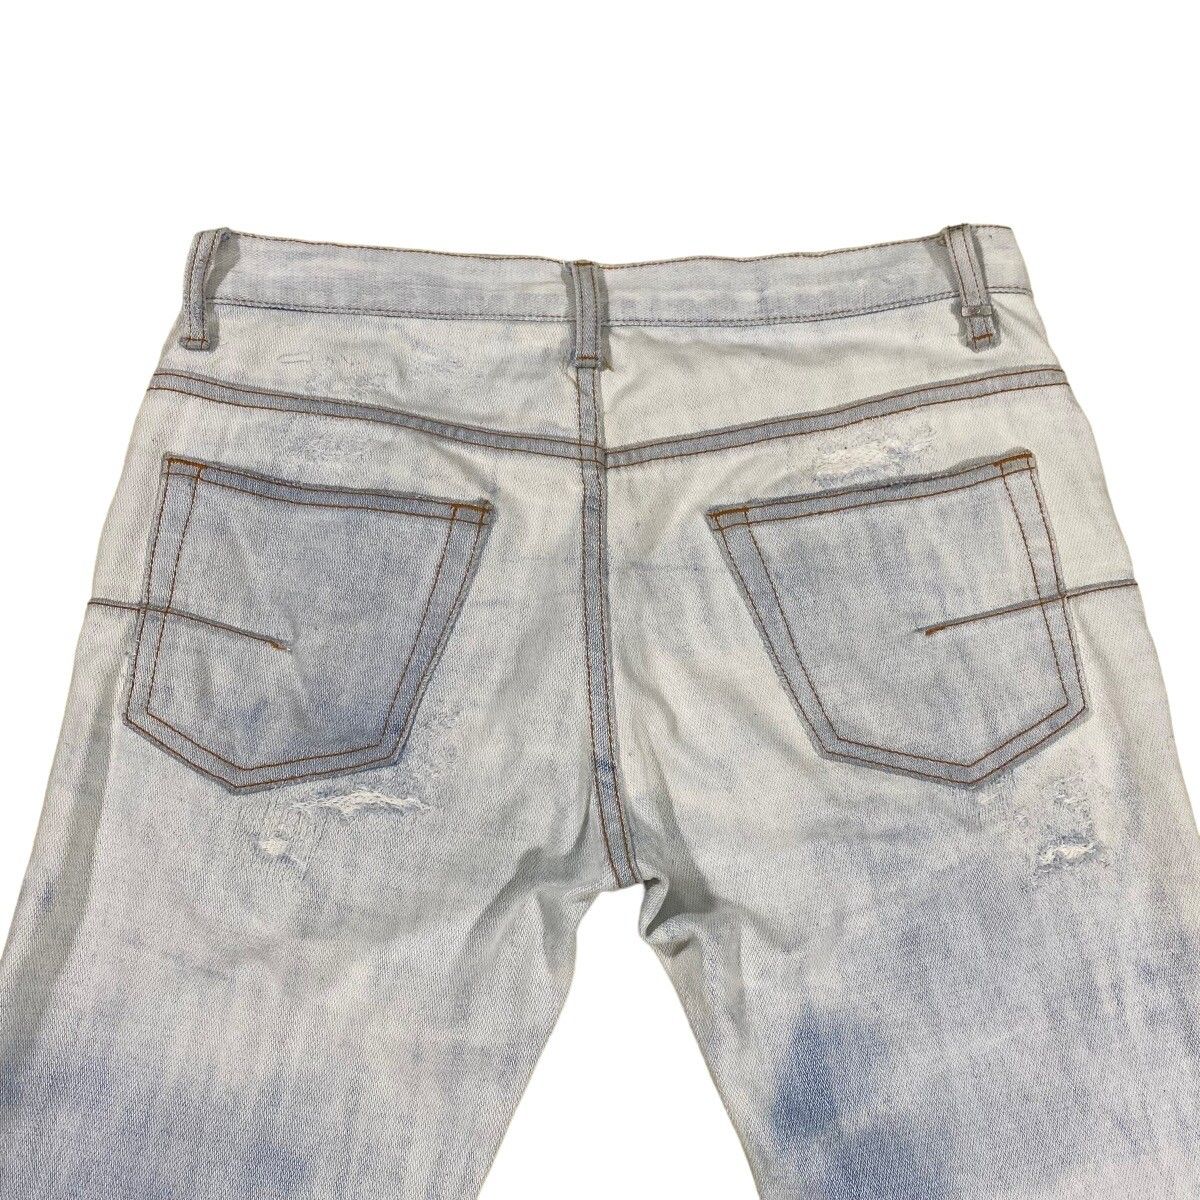 Dior Homme SS06 Dirty Snow Denim Jeans - 17